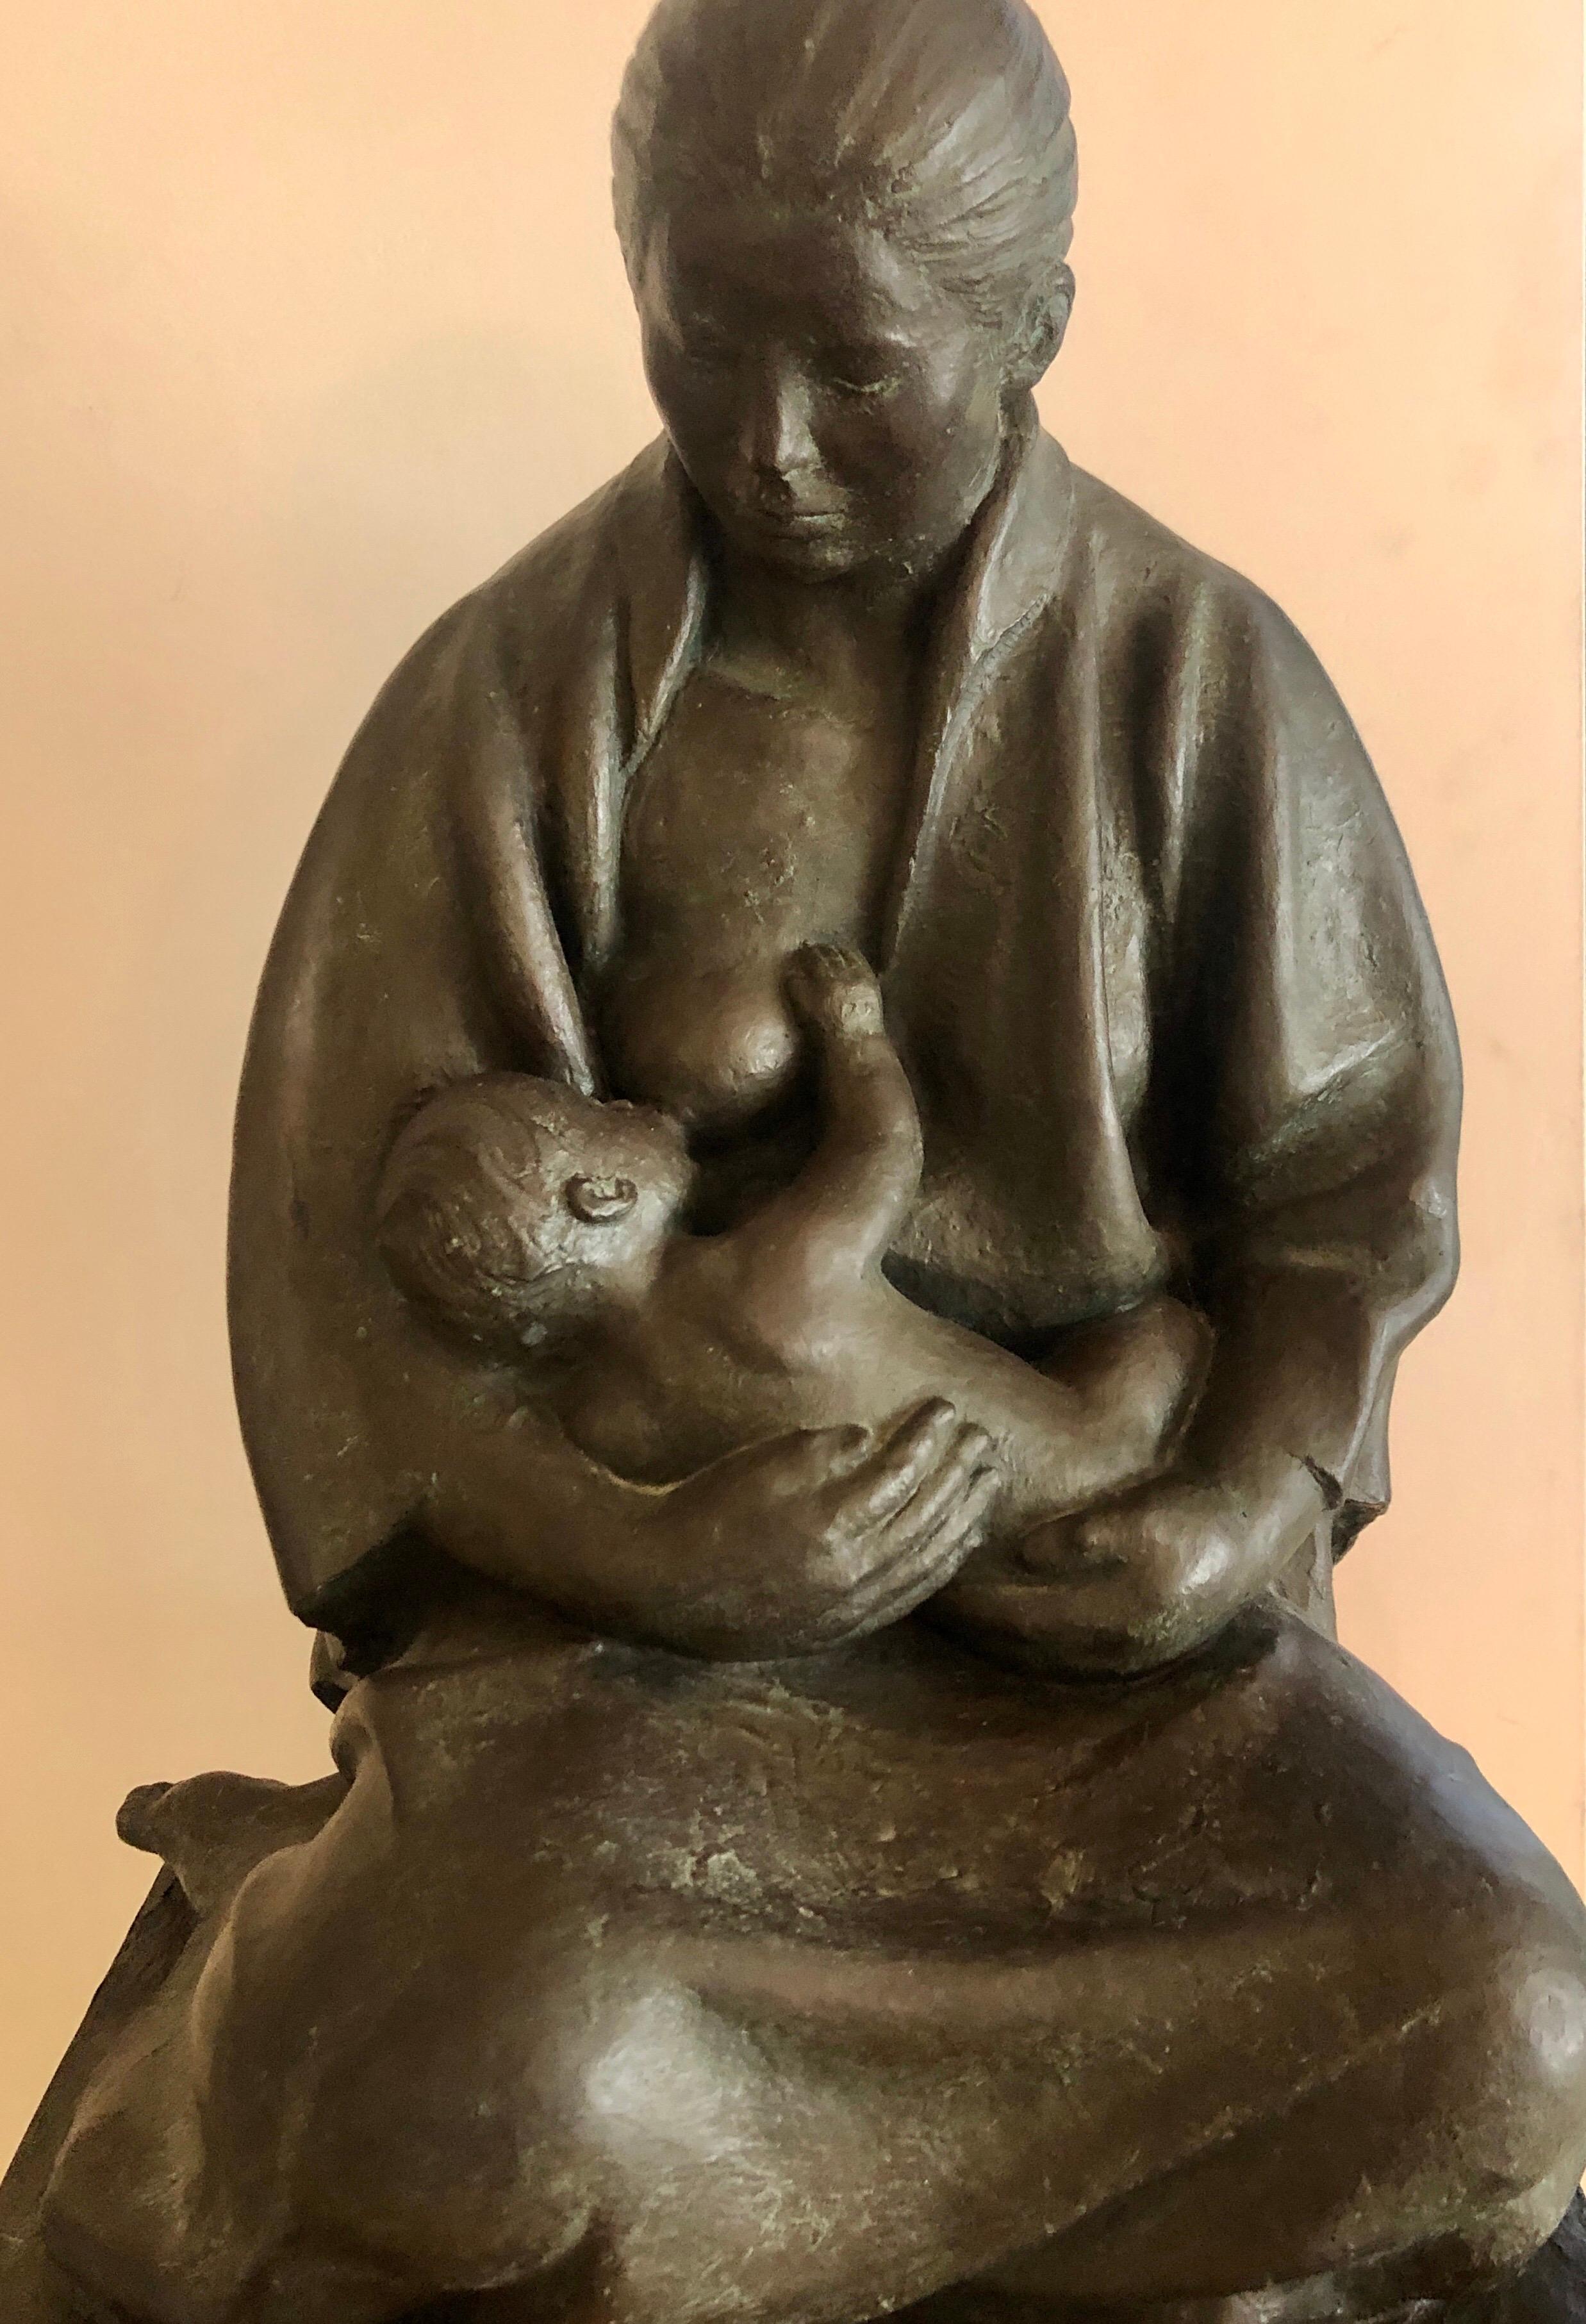 Figurative Sculpture Felipe Castañeda - Grande sculpture mexicaine latine et latino-américaine de maître en bronze Mère avec enfant soufflé